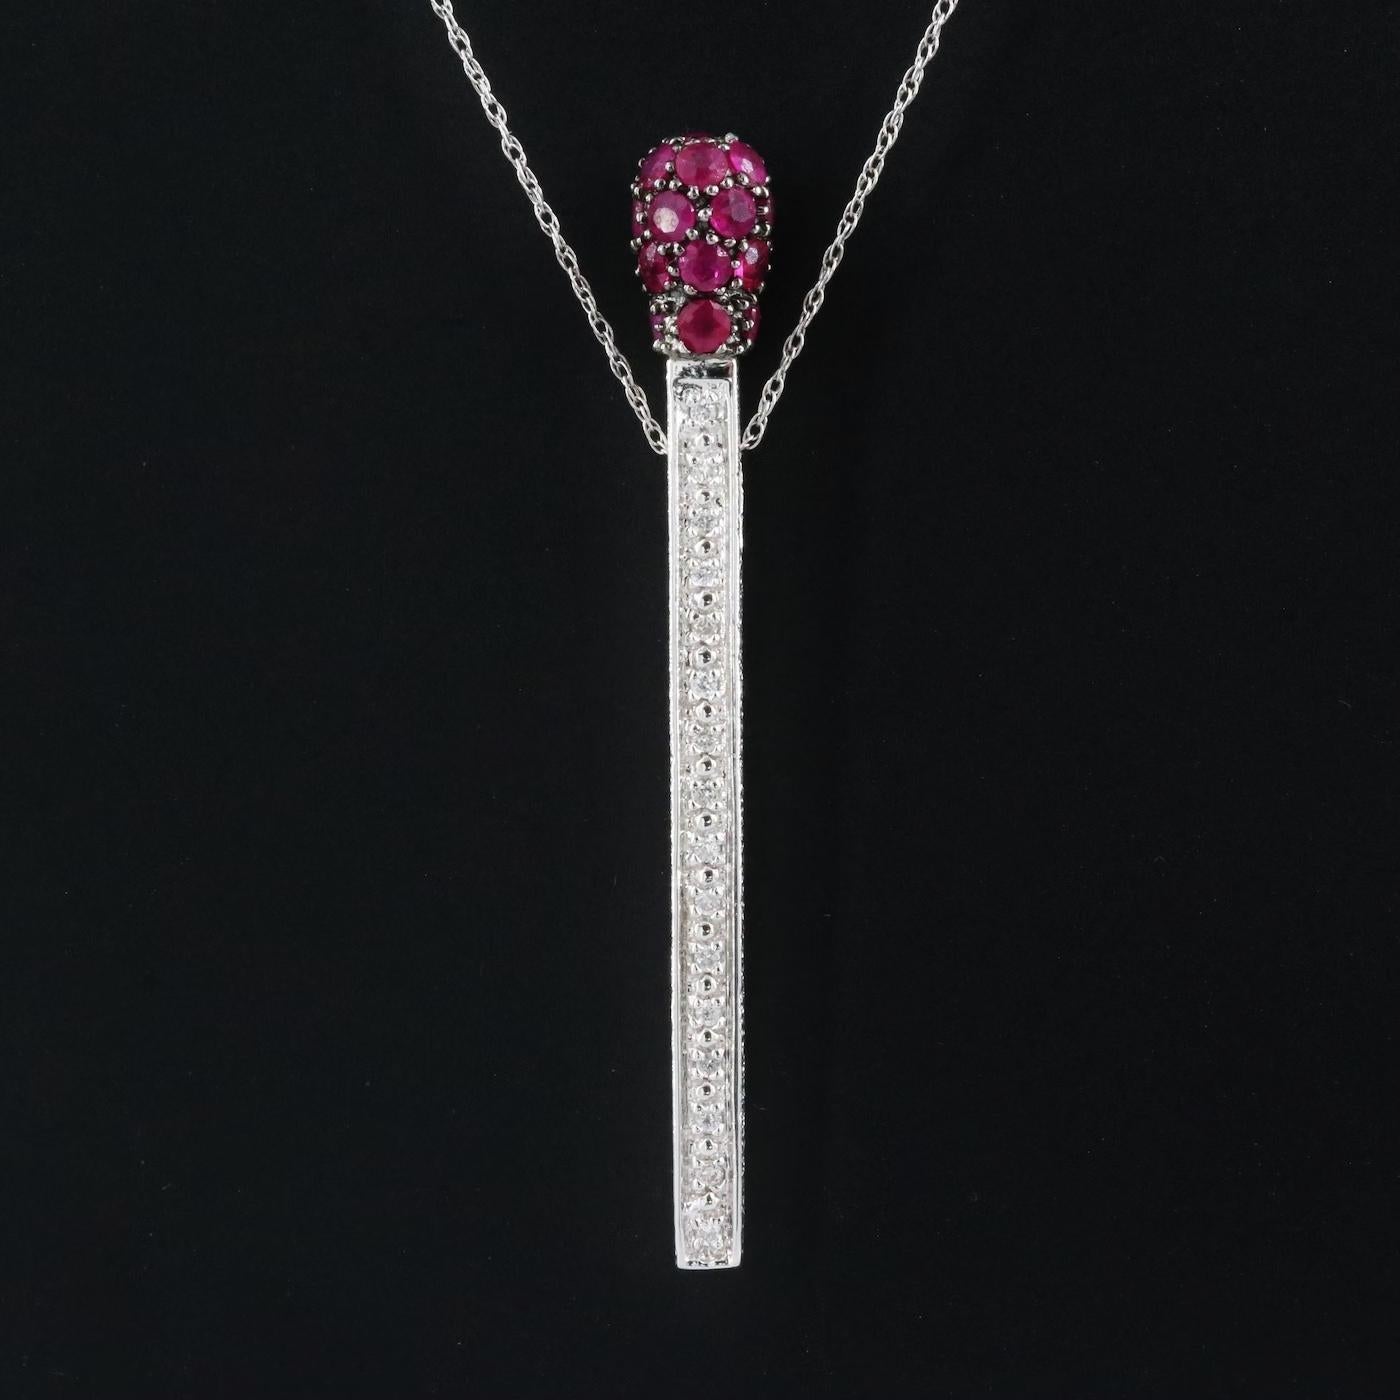 Round Cut $3950 / John C Rinker Designer Ruby & Diamond Matchstick 3D Necklace / 14K Gold